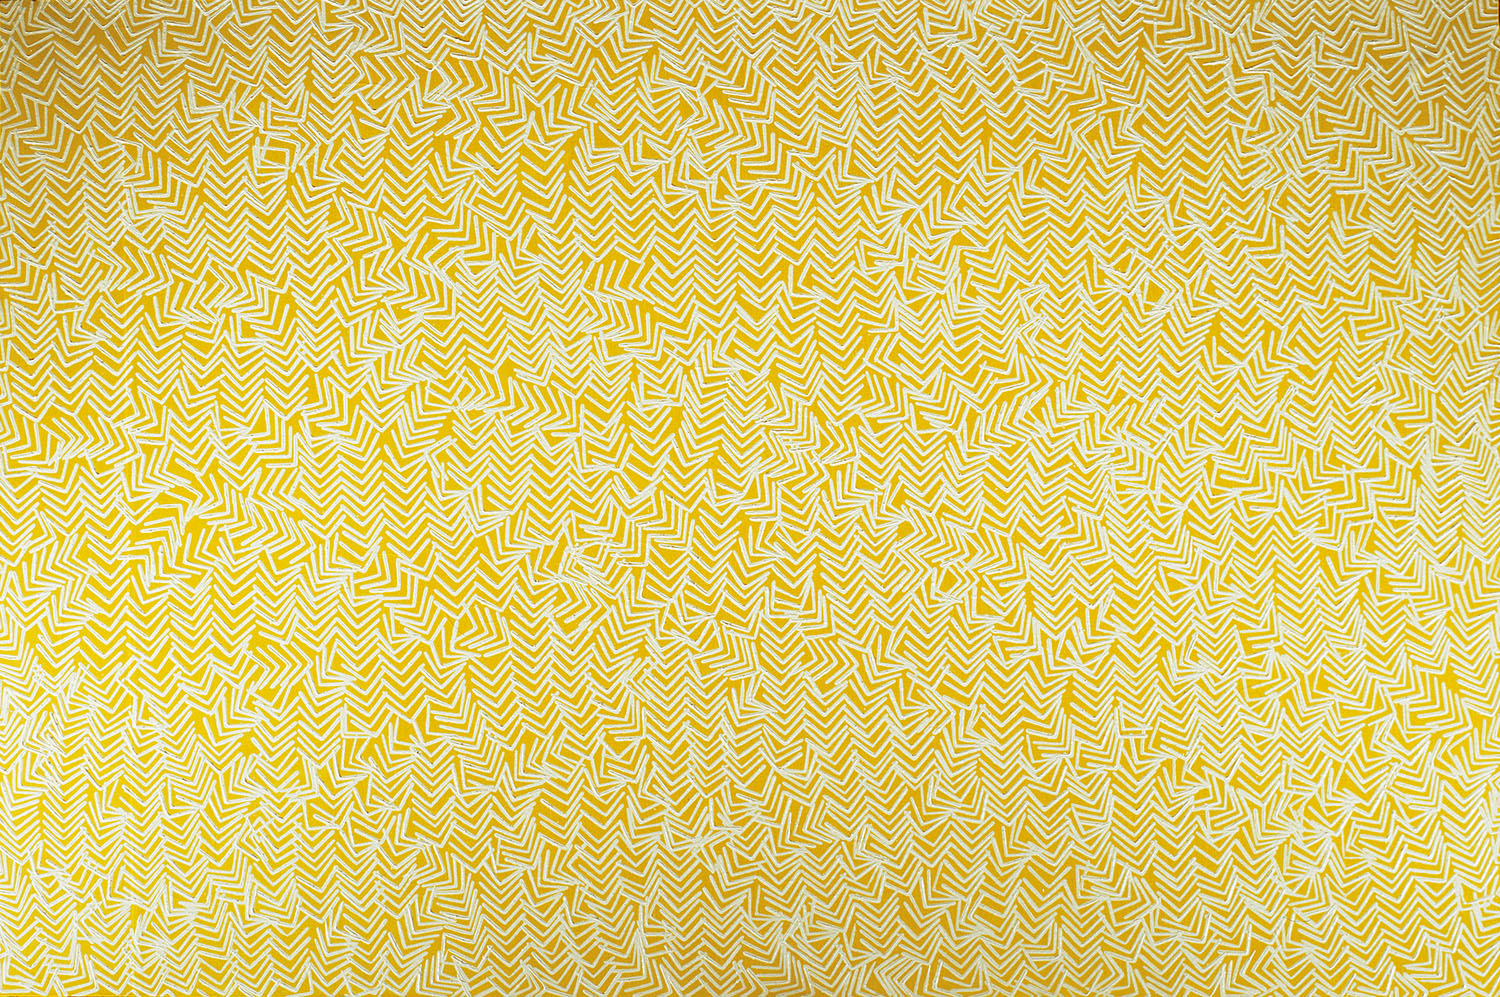 Kinetic composition, 1974, oil on canvas, cm 97 x 146